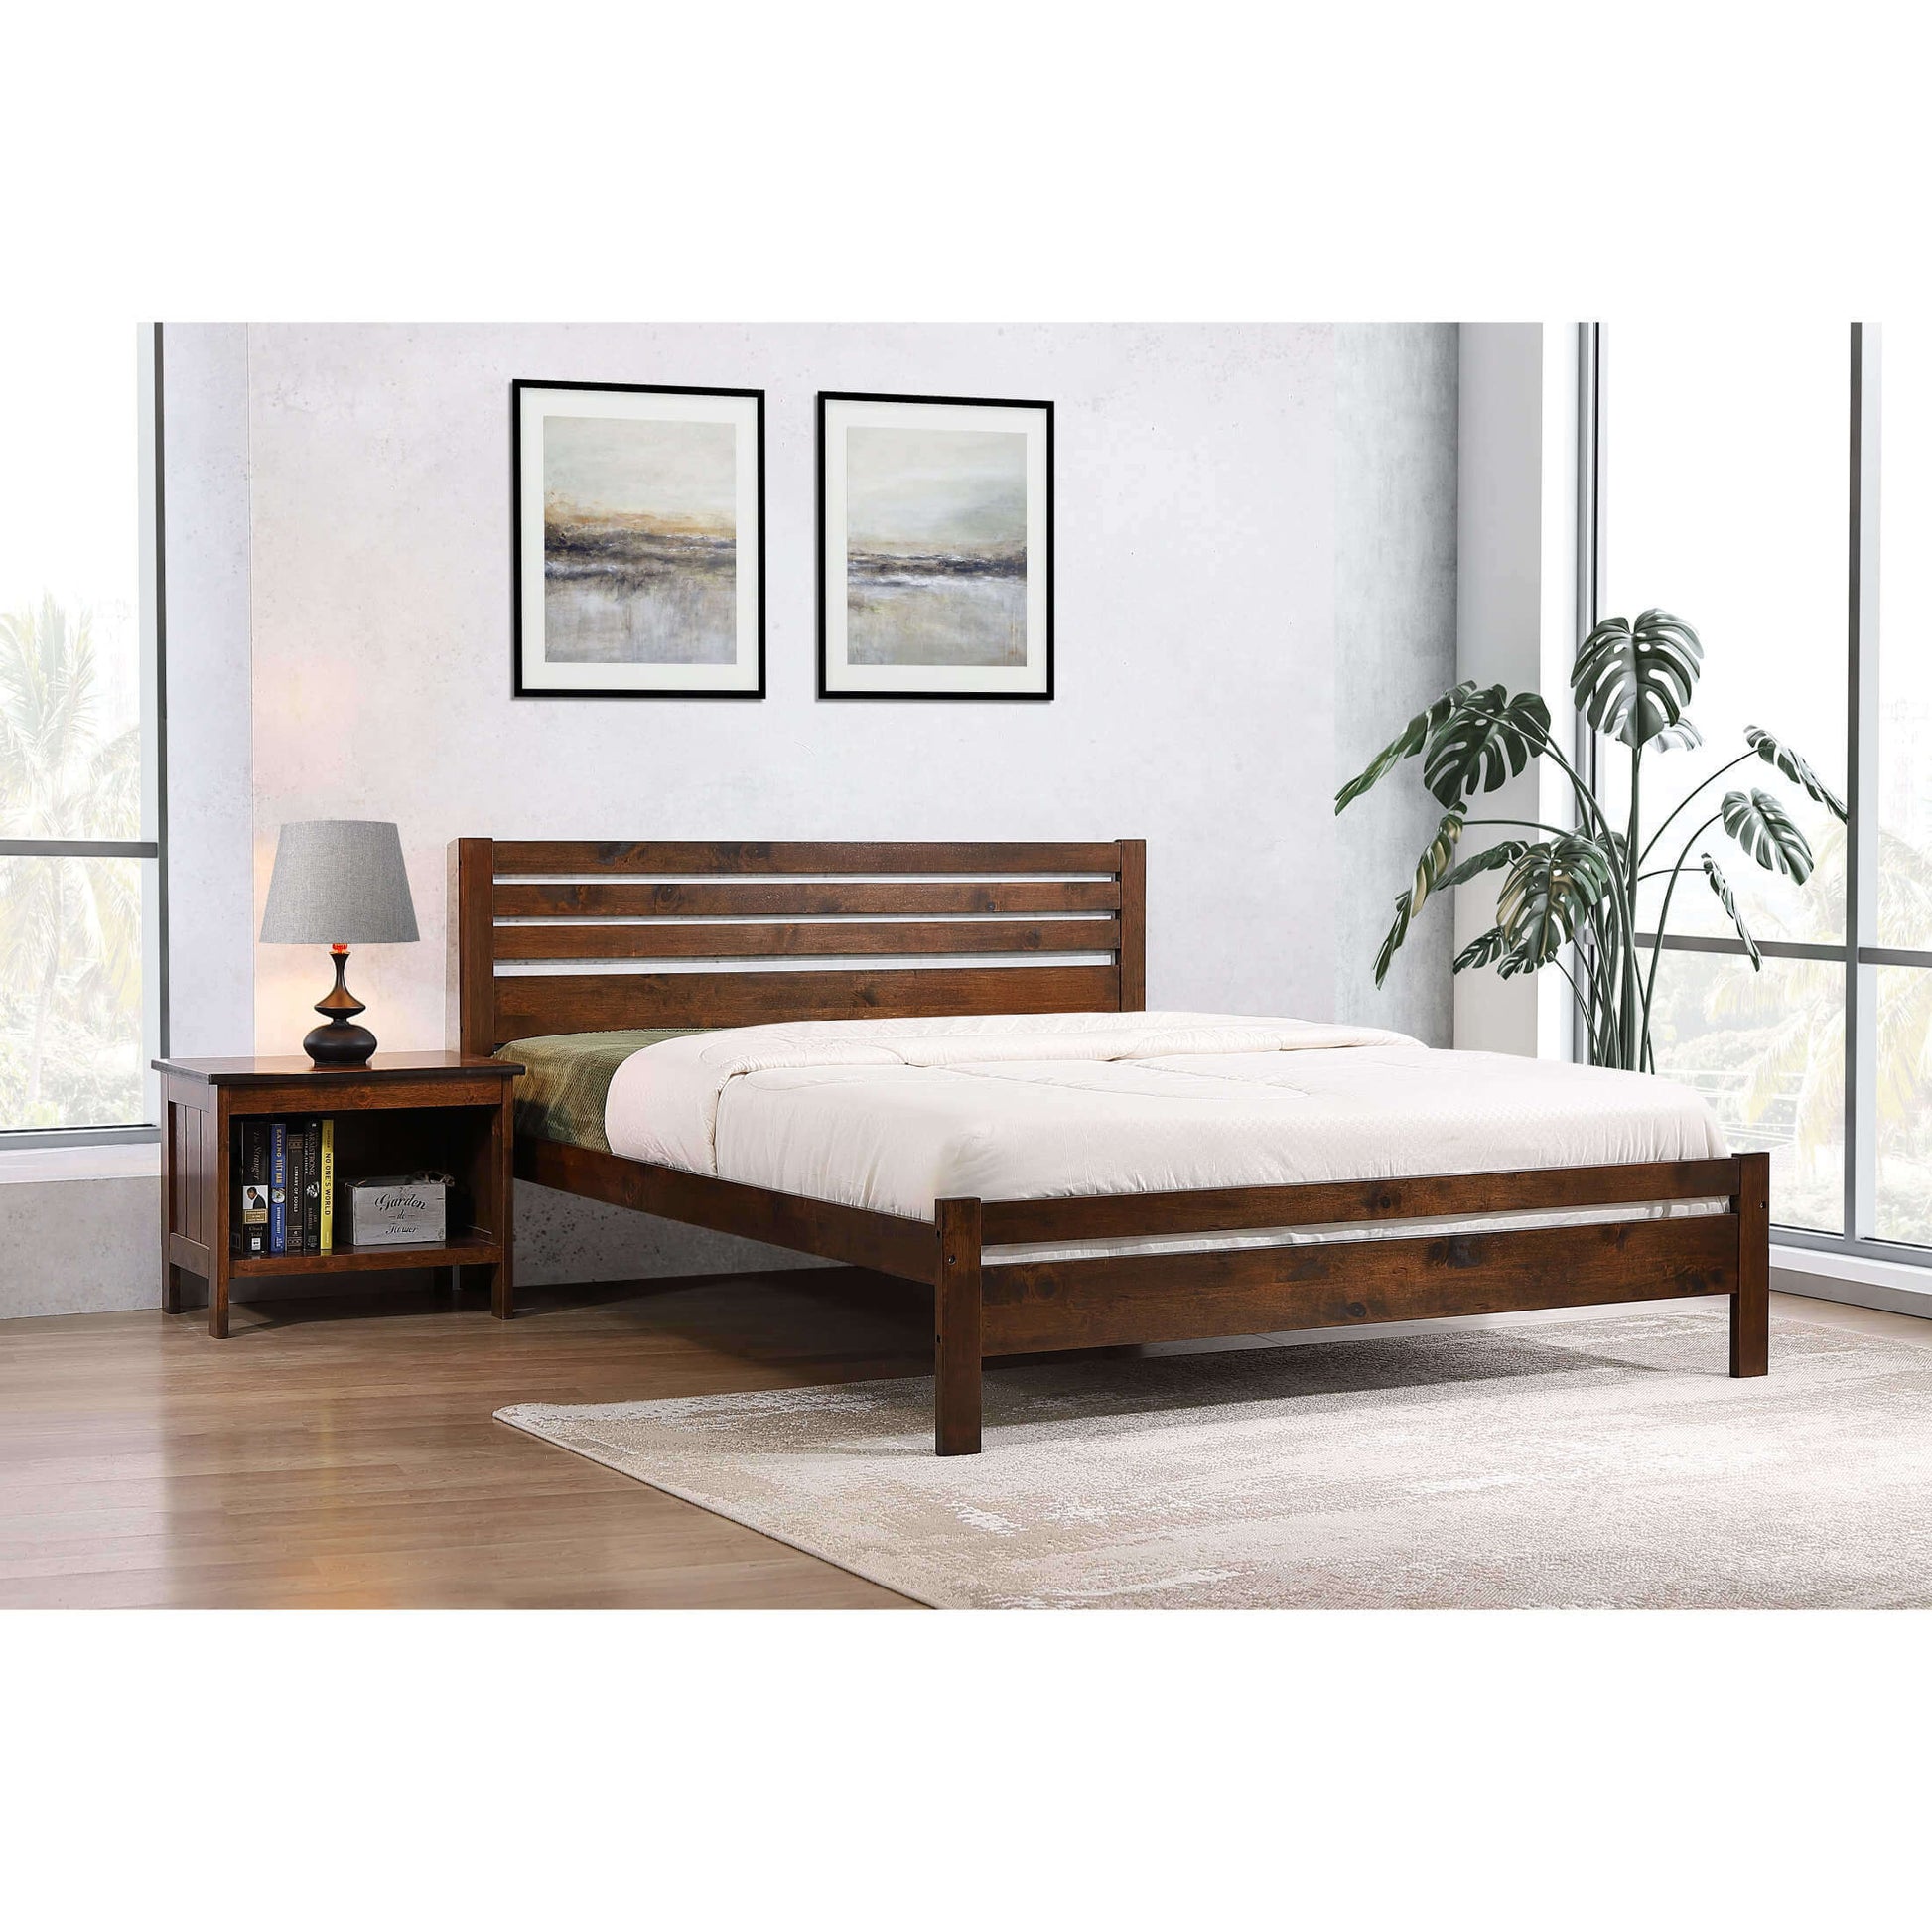 Ashpinoke:Astley Double Bed Solid Hardwood Antique Oak,Double Beds,Heartlands Furniture